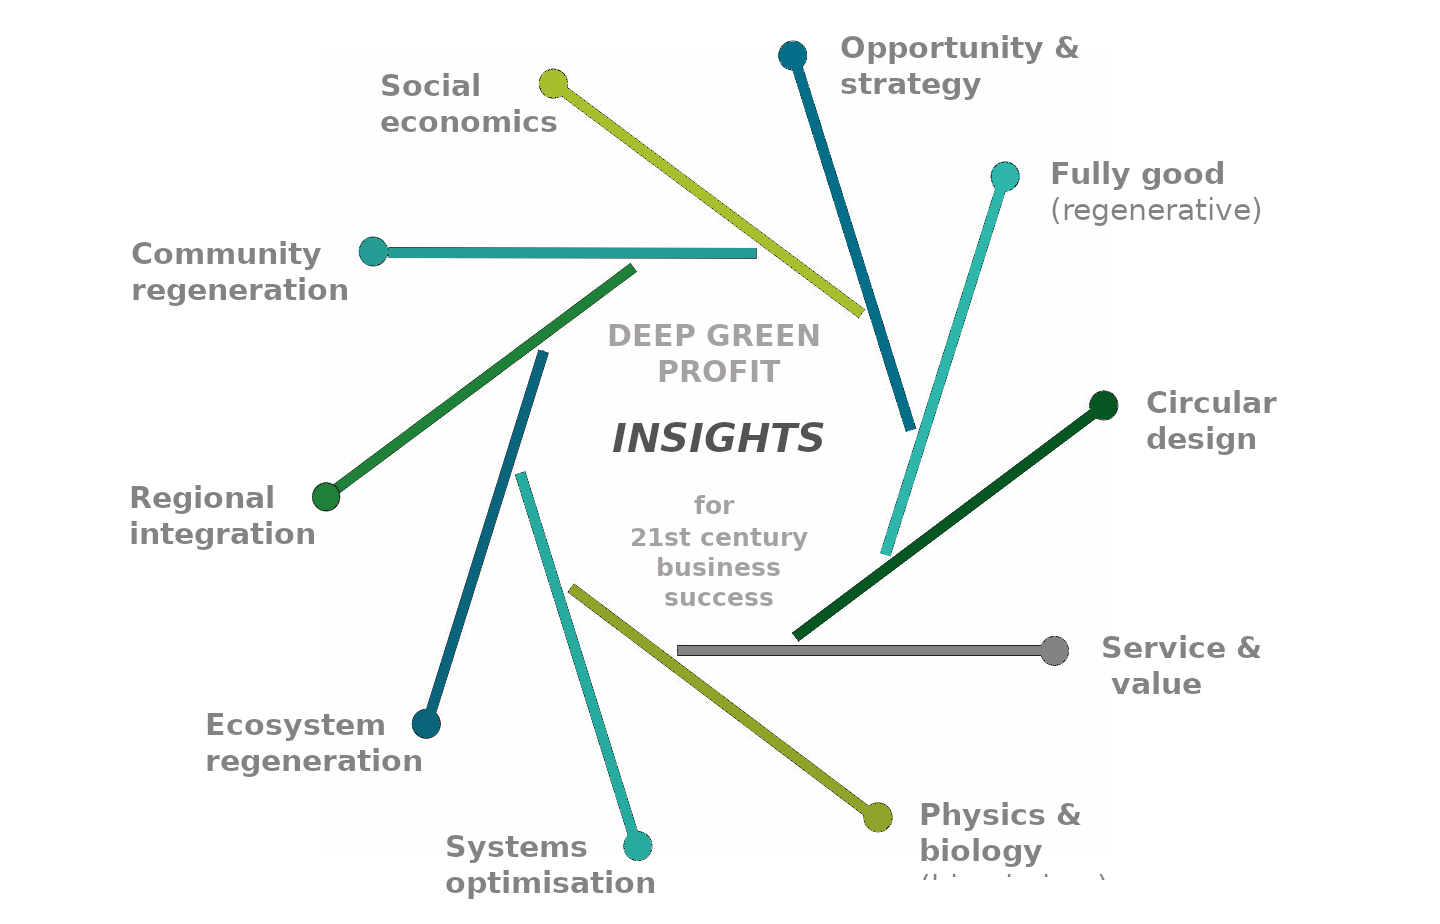 Deep Green Profit business innovation principles